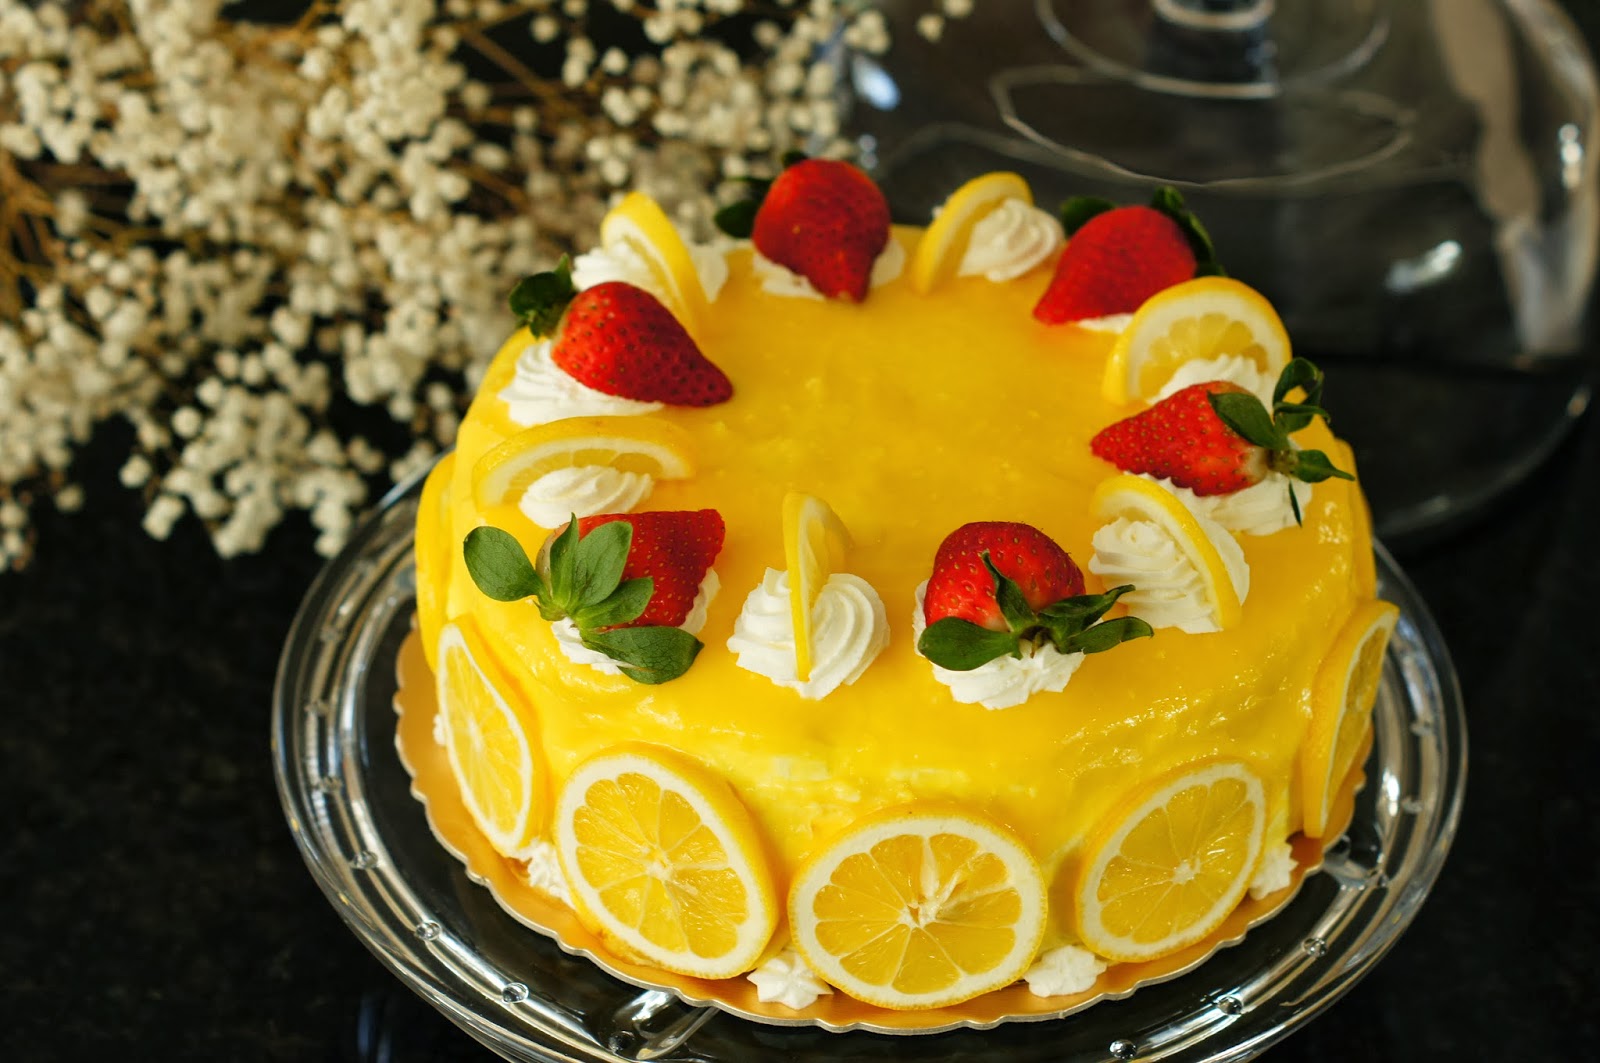 Helena's Kitchen: 英式柠檬蛋糕 （Lemon Cake）